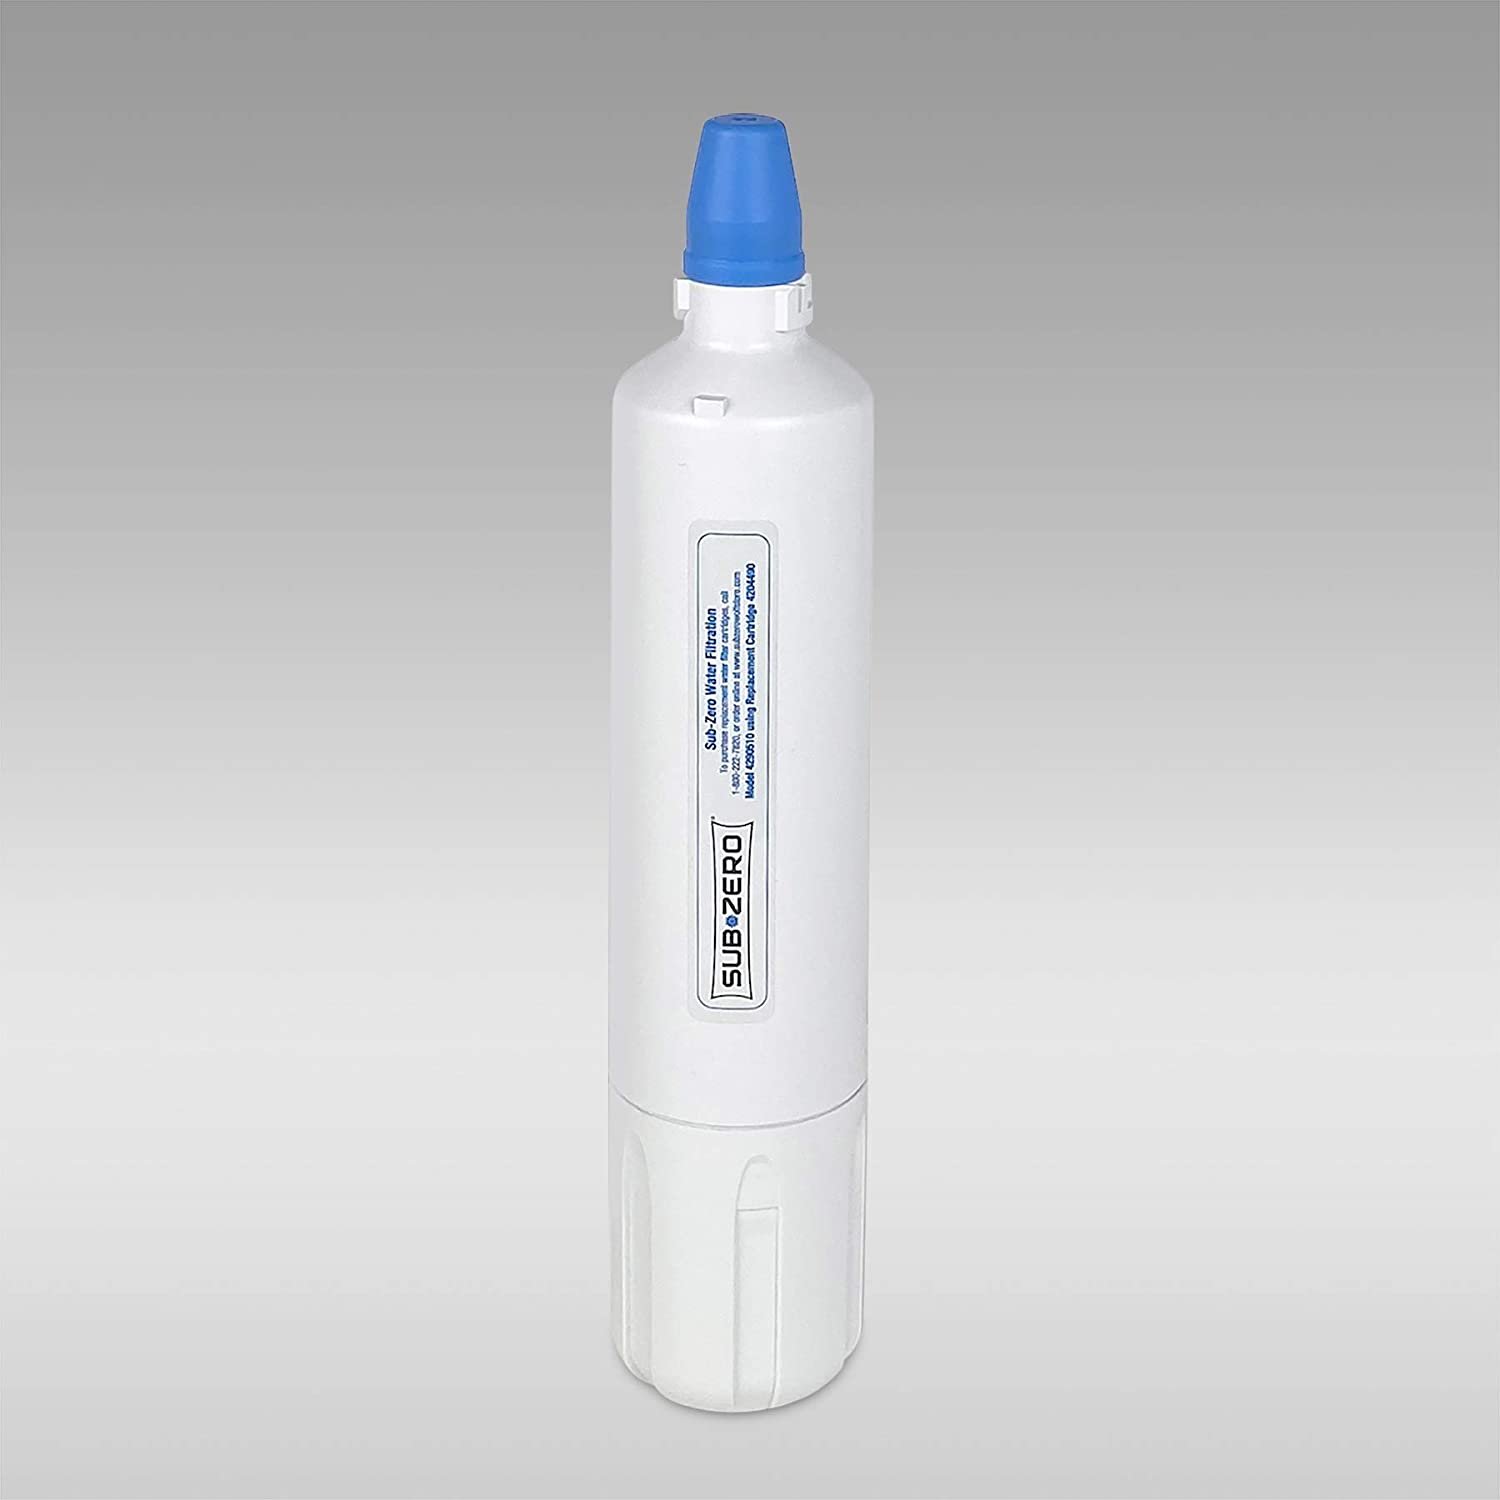 Sub-Zero 4204490 Refrigerator Water Filter, White